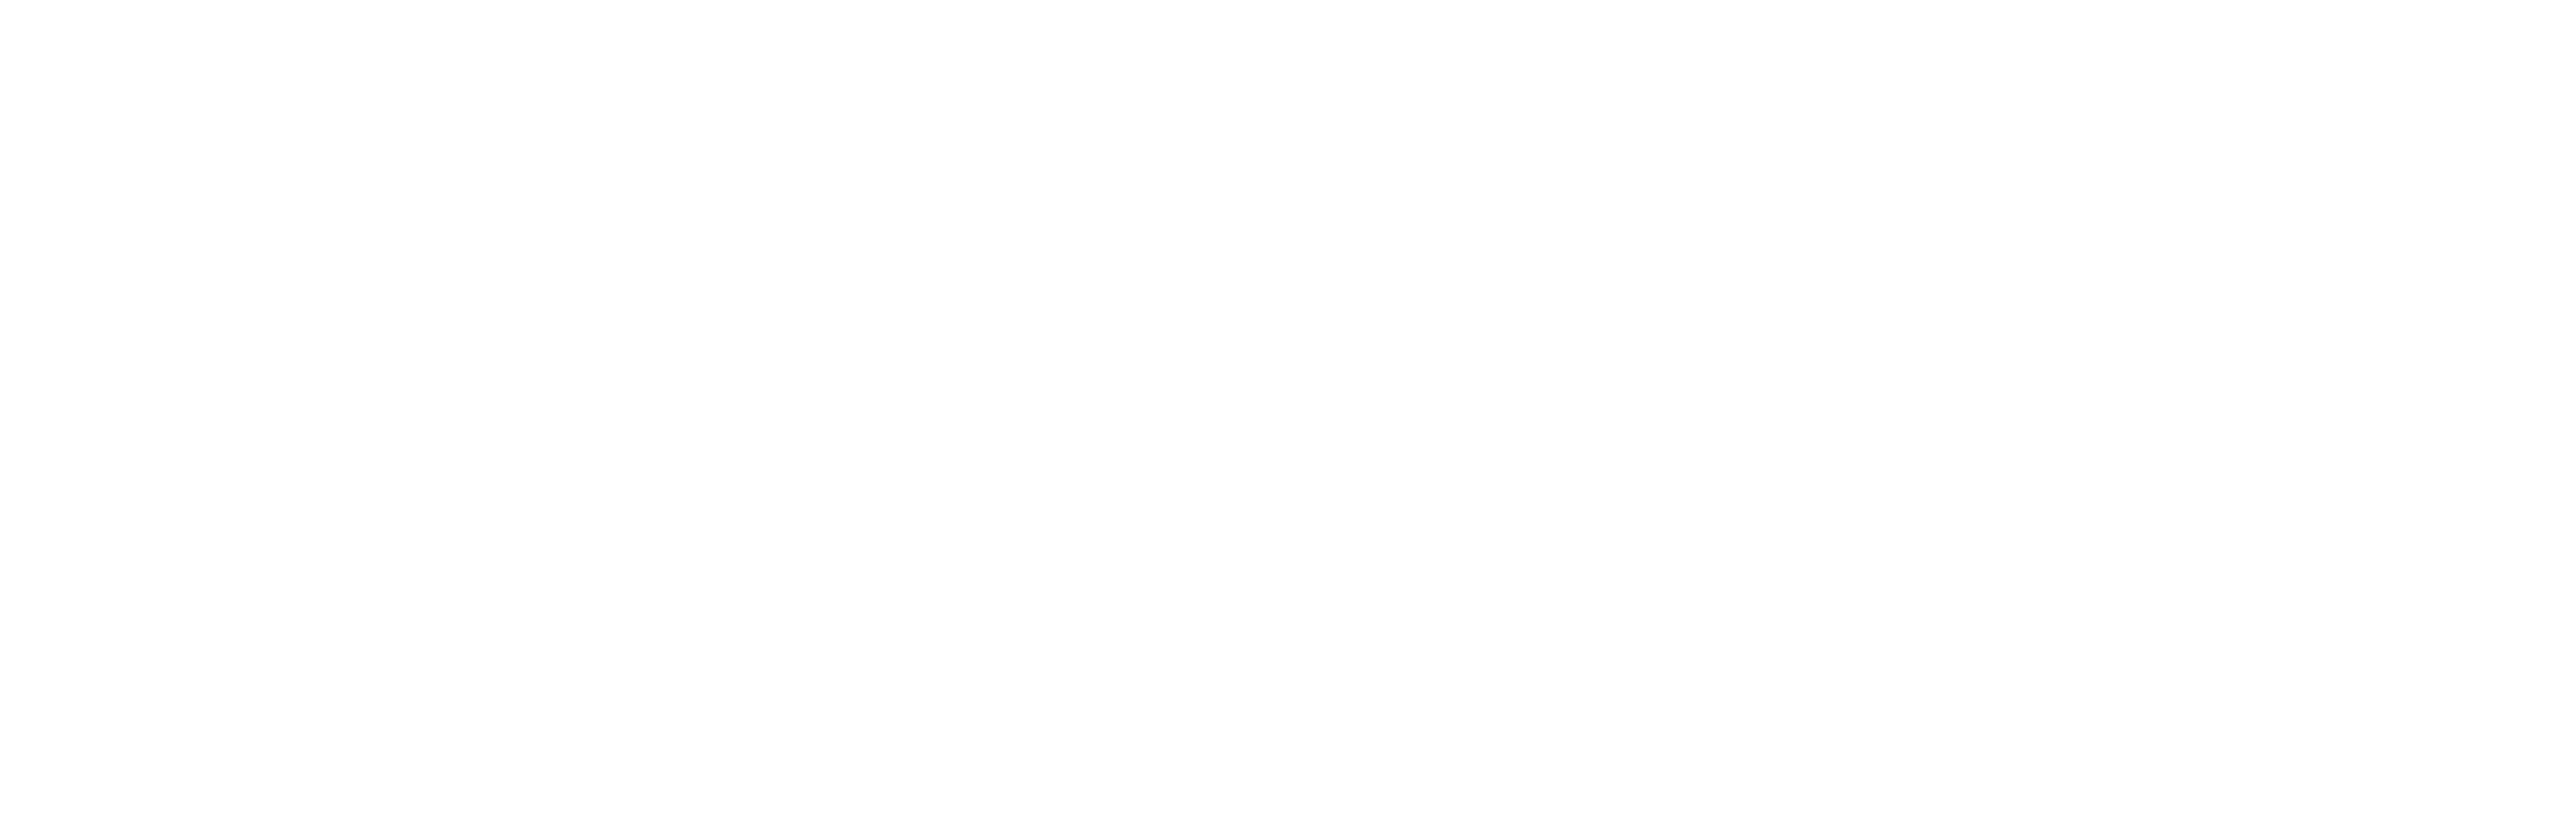 Southern Association Management